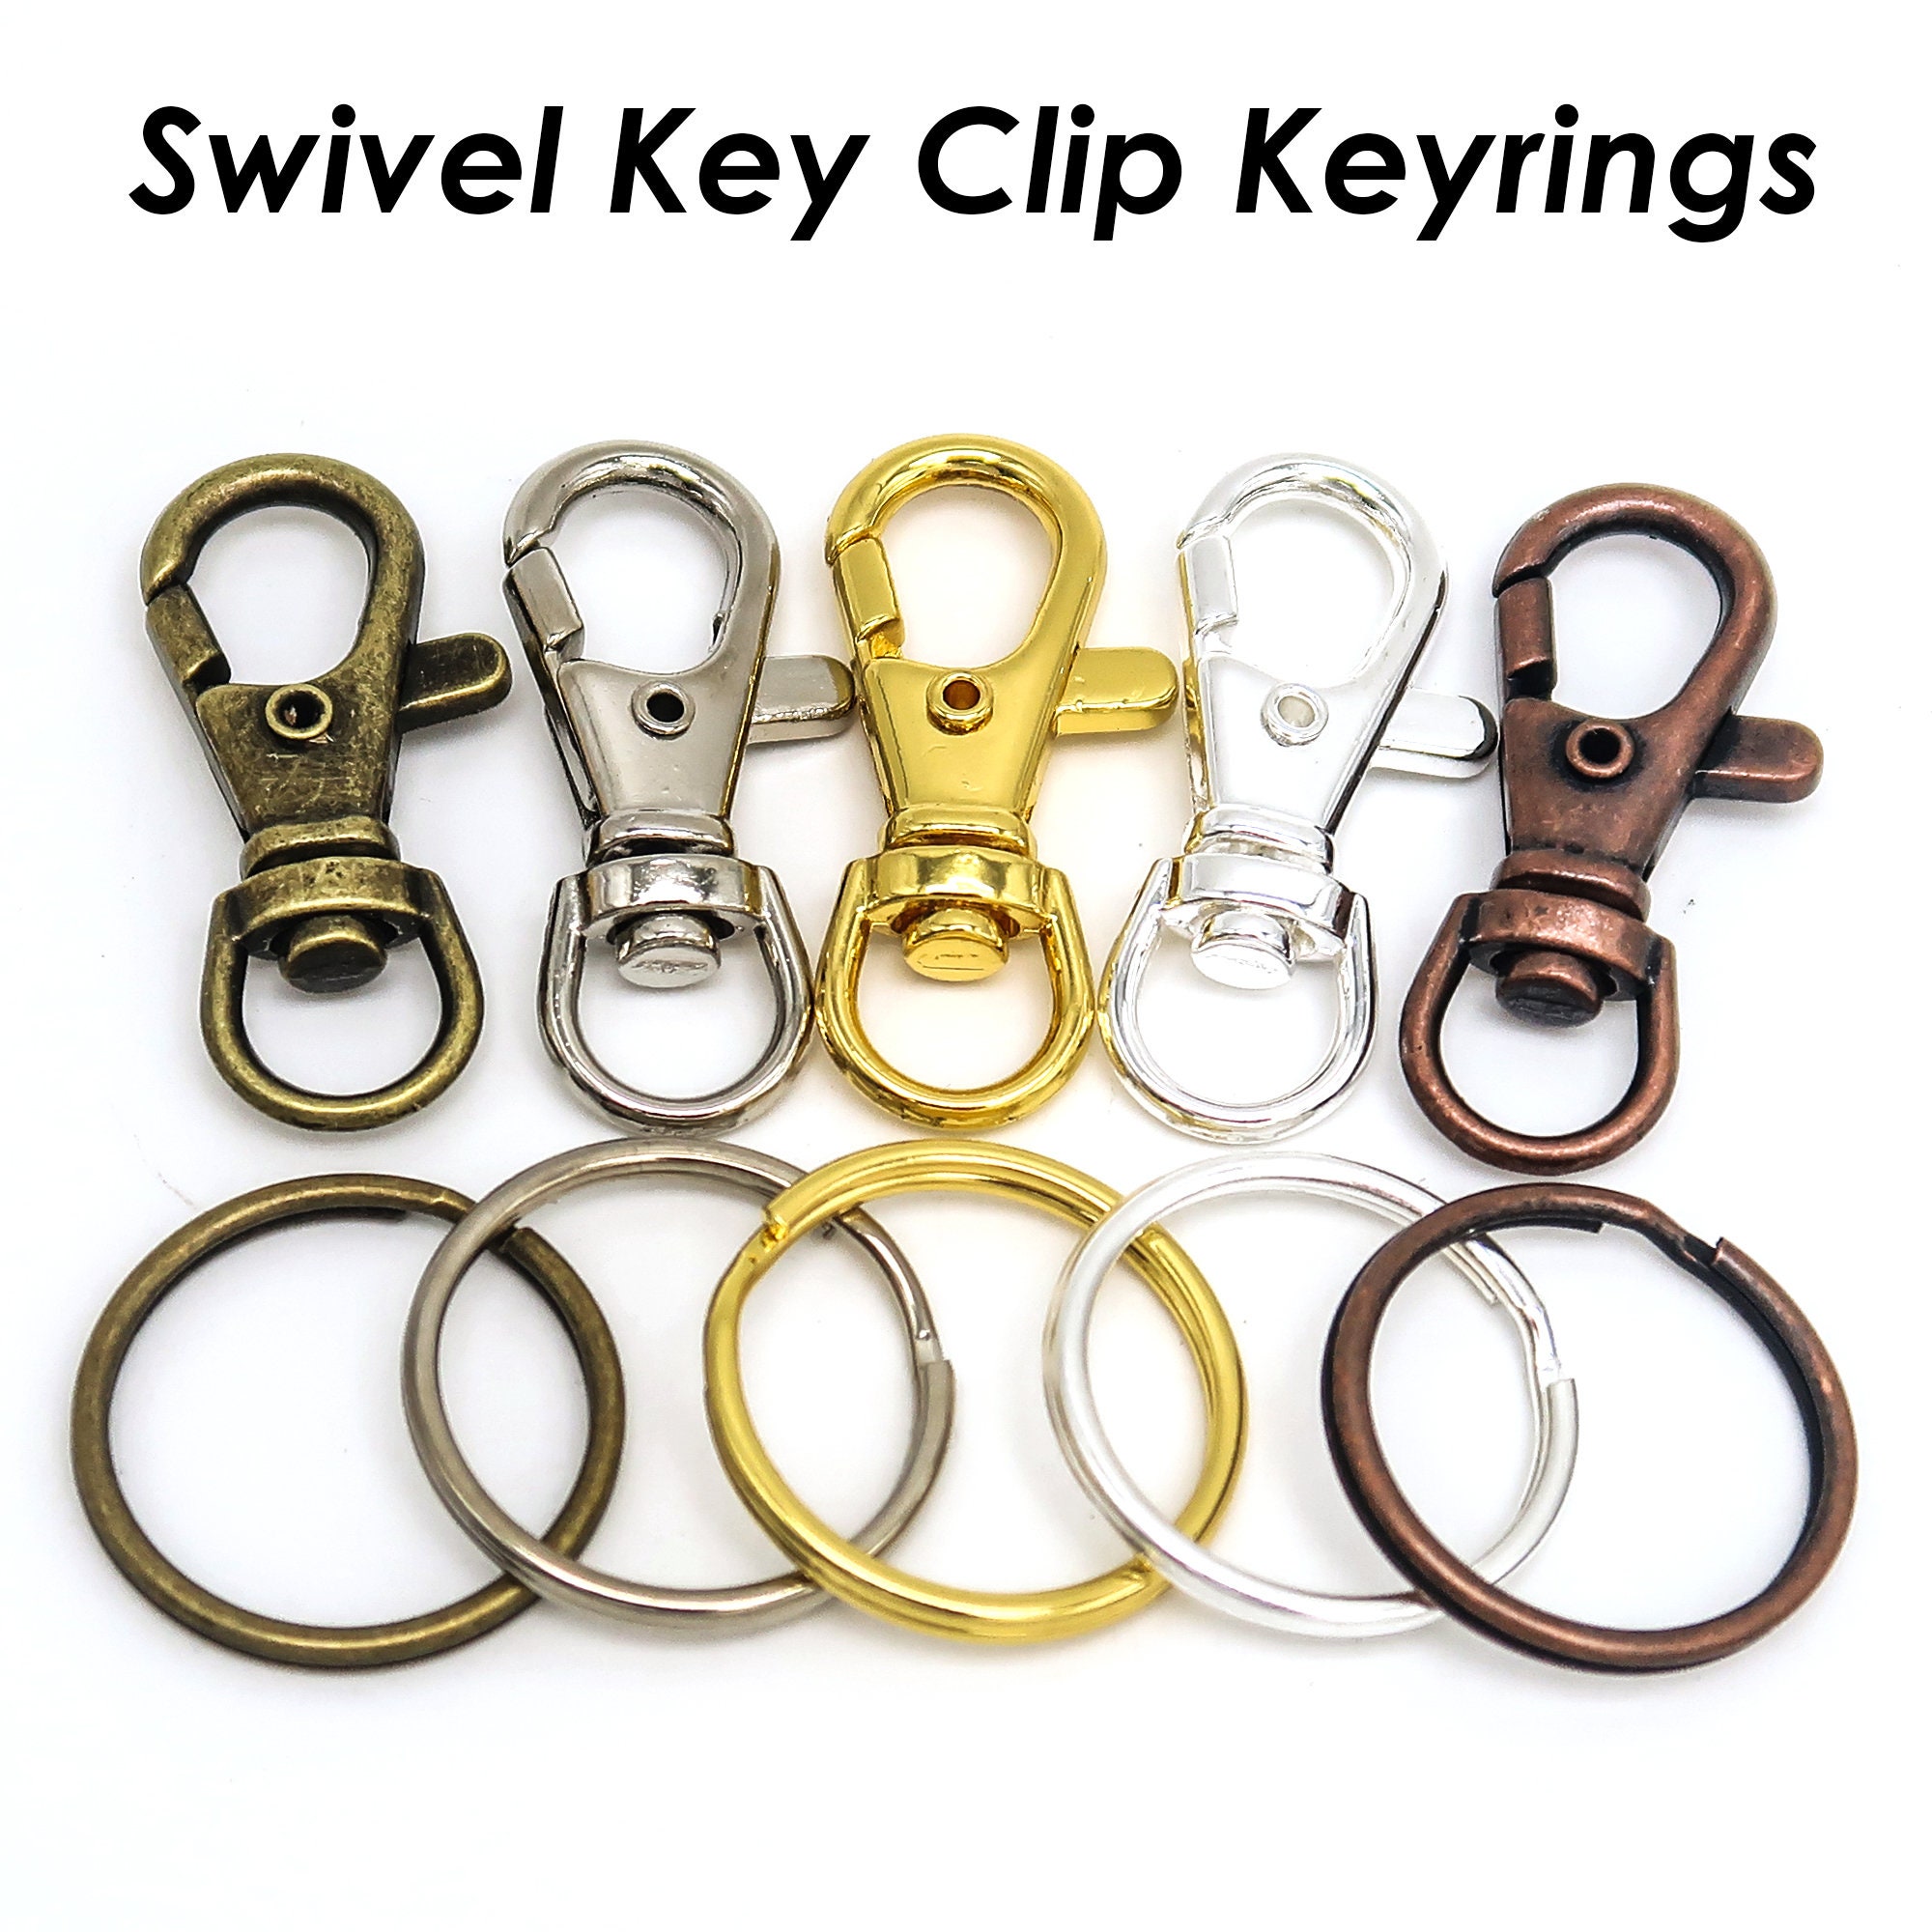 100 x Swivel Key Clips, Swivel Clip Hook Key Clasp Keychain Supplies -  Silver Plated/Brozne/Copper/Steel for Key Chain Making